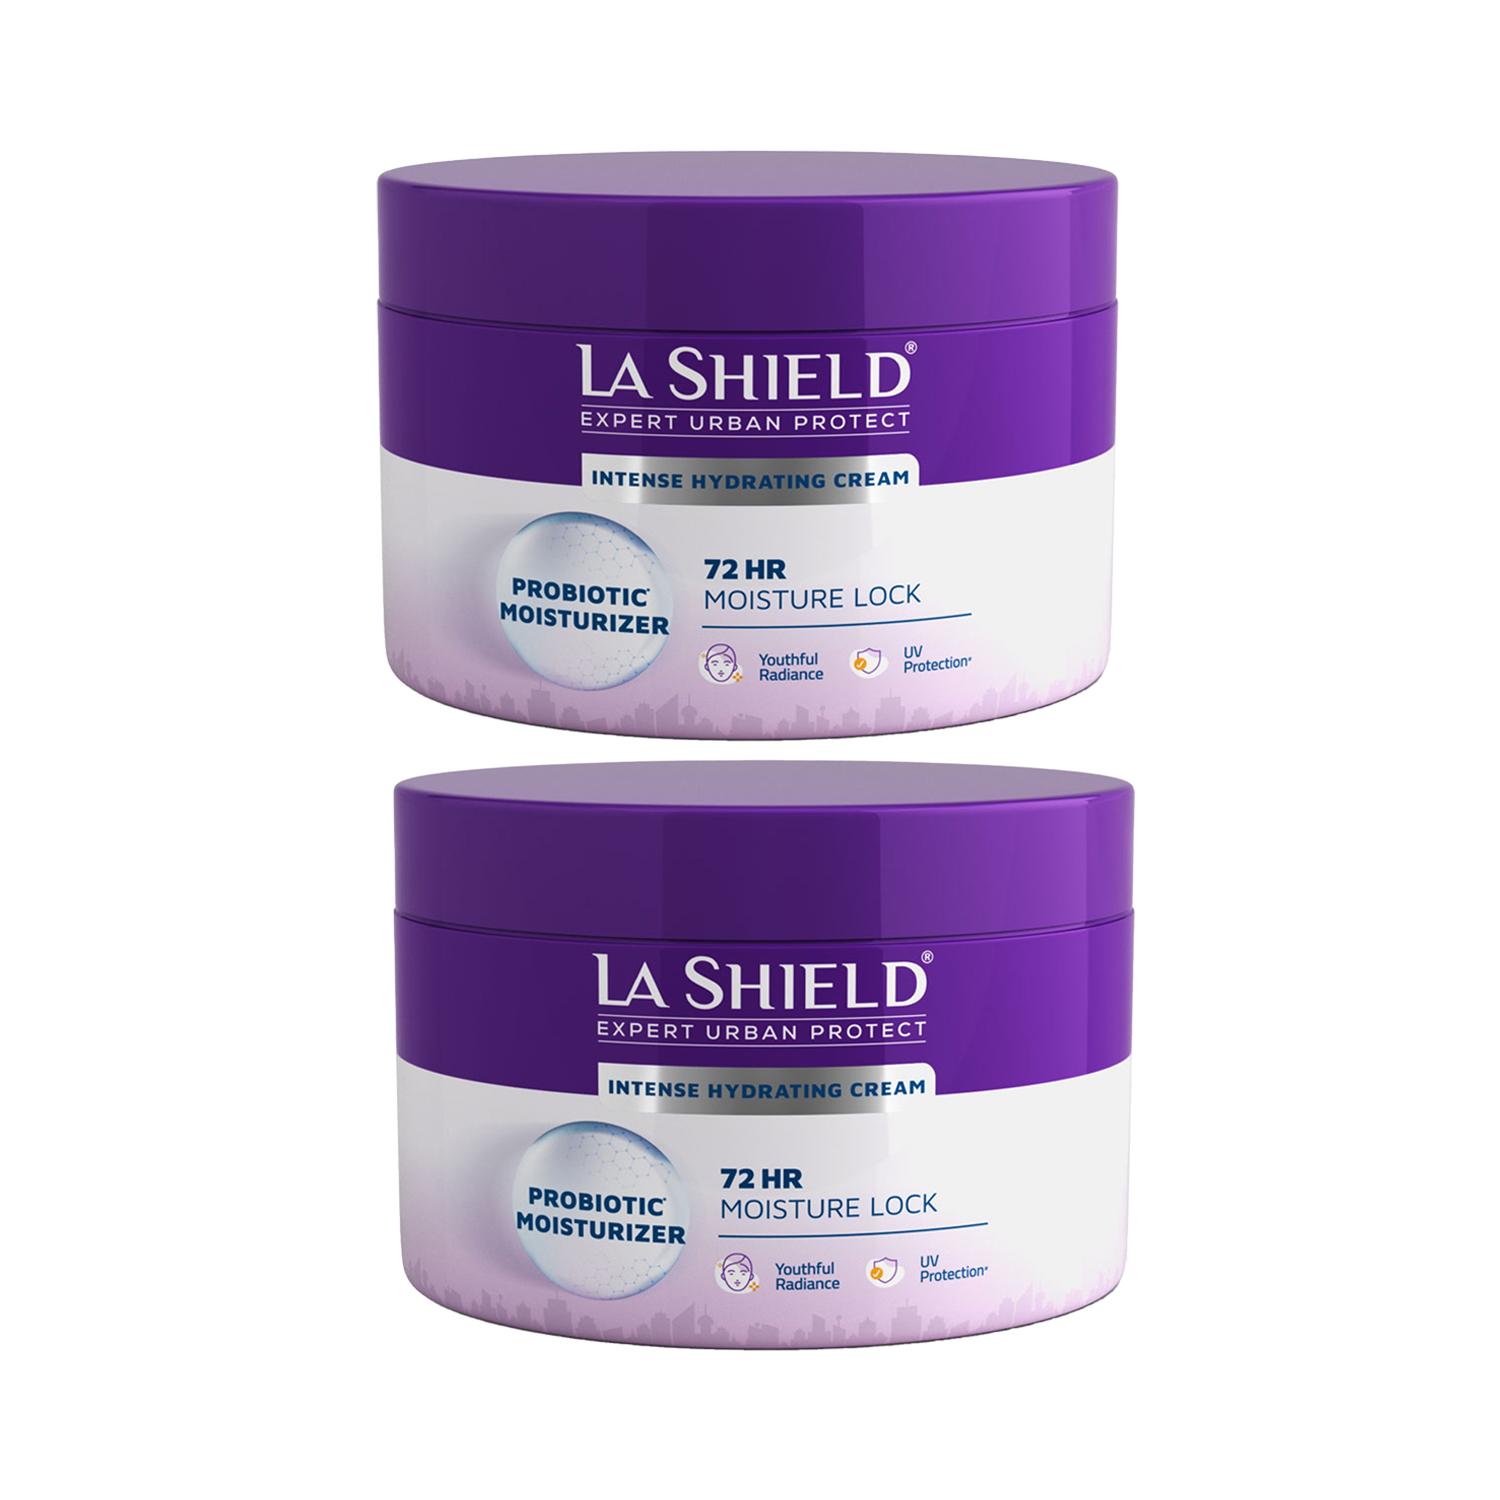 La Shield | La Shield Intense Hydrating Cream Probiotic Moisturizing Cream Pack of 2 (50 g) Combo